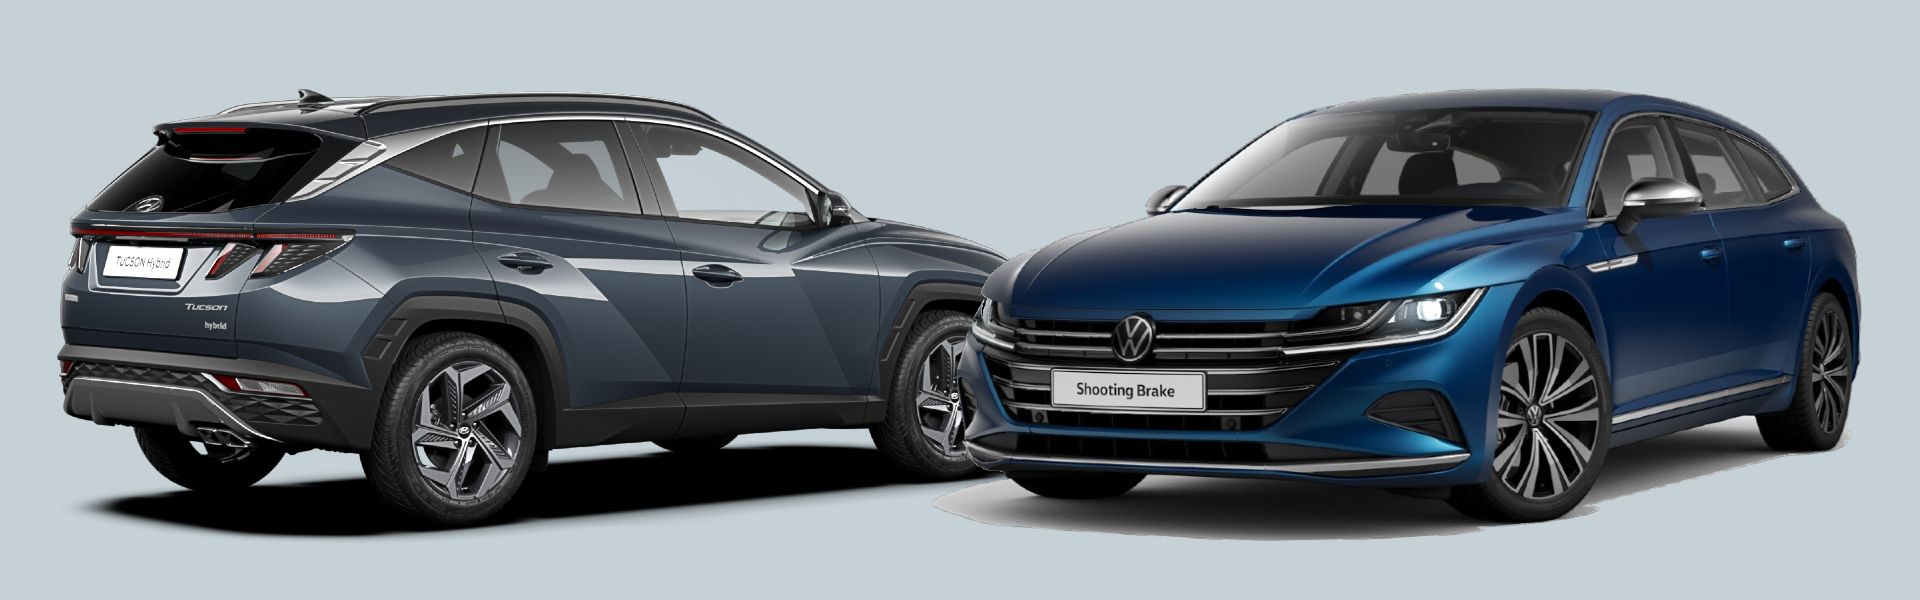 Novinky z Driveta: VW Arteon a Hyundai Tucson